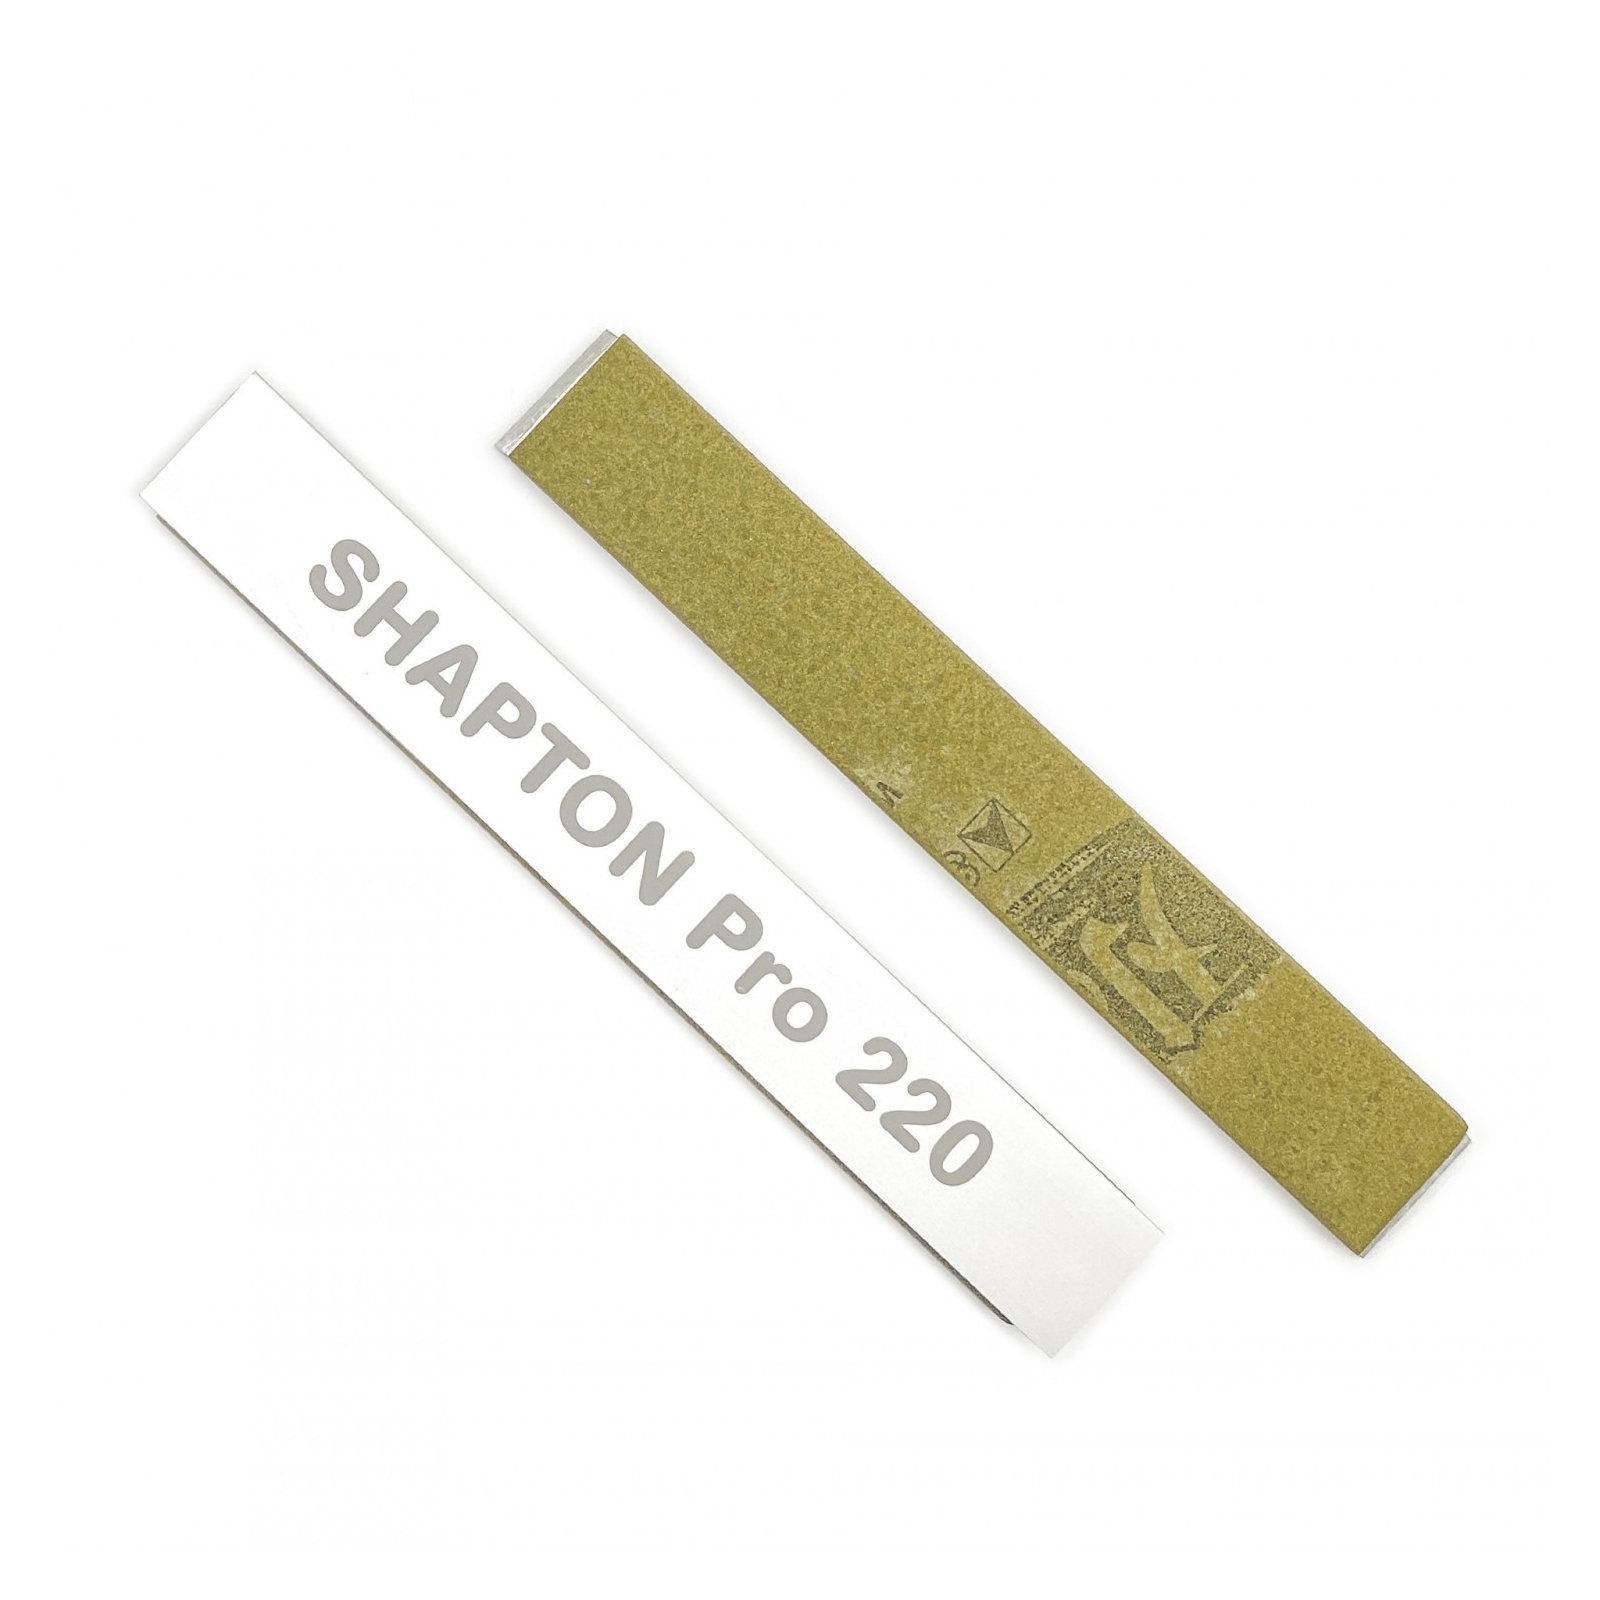 Shapton 220-1500x1500.jpg